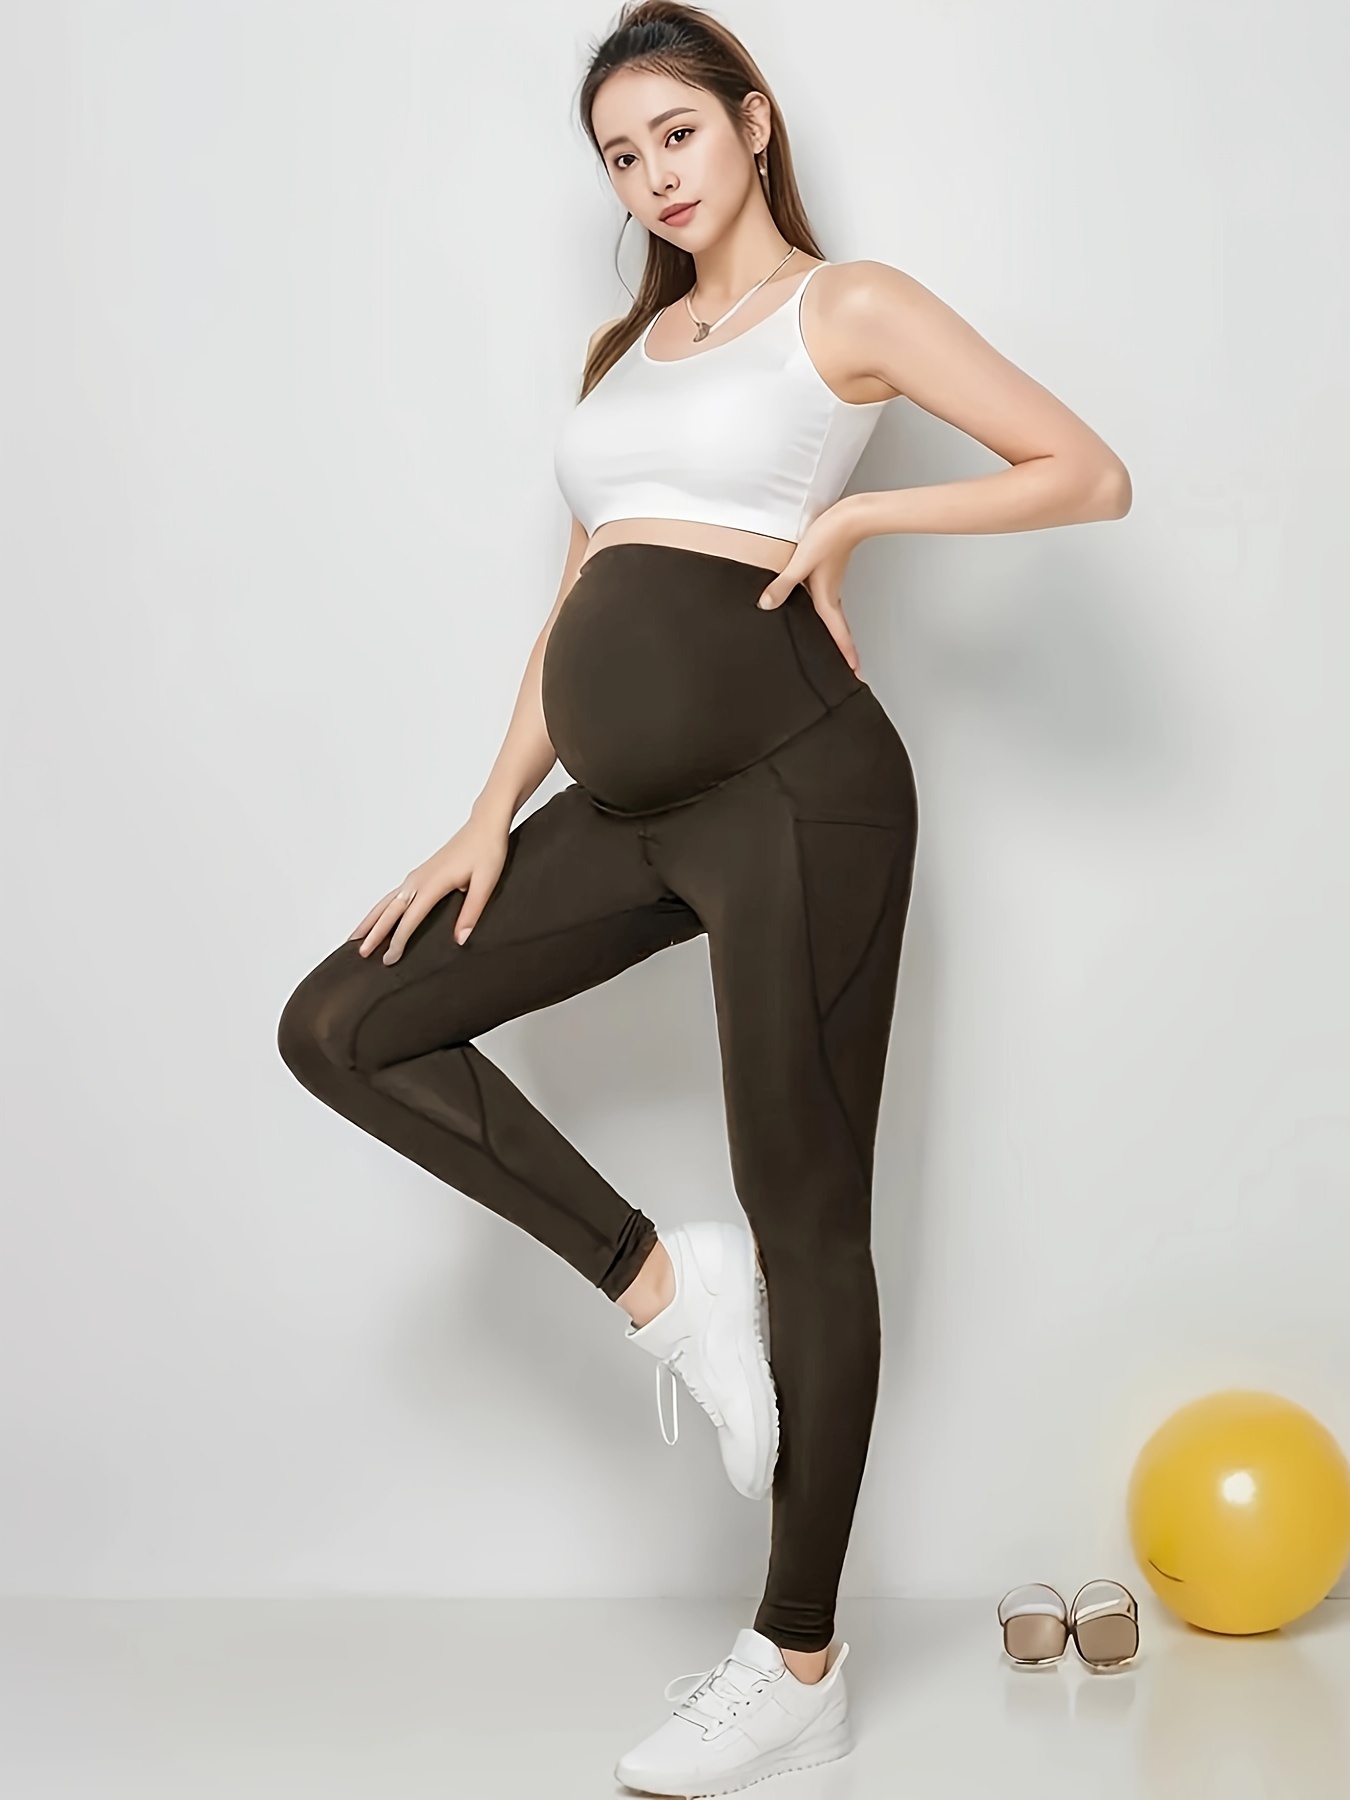 Women's Maternity Solid Leggings Medium Stretchy Sports Yoga